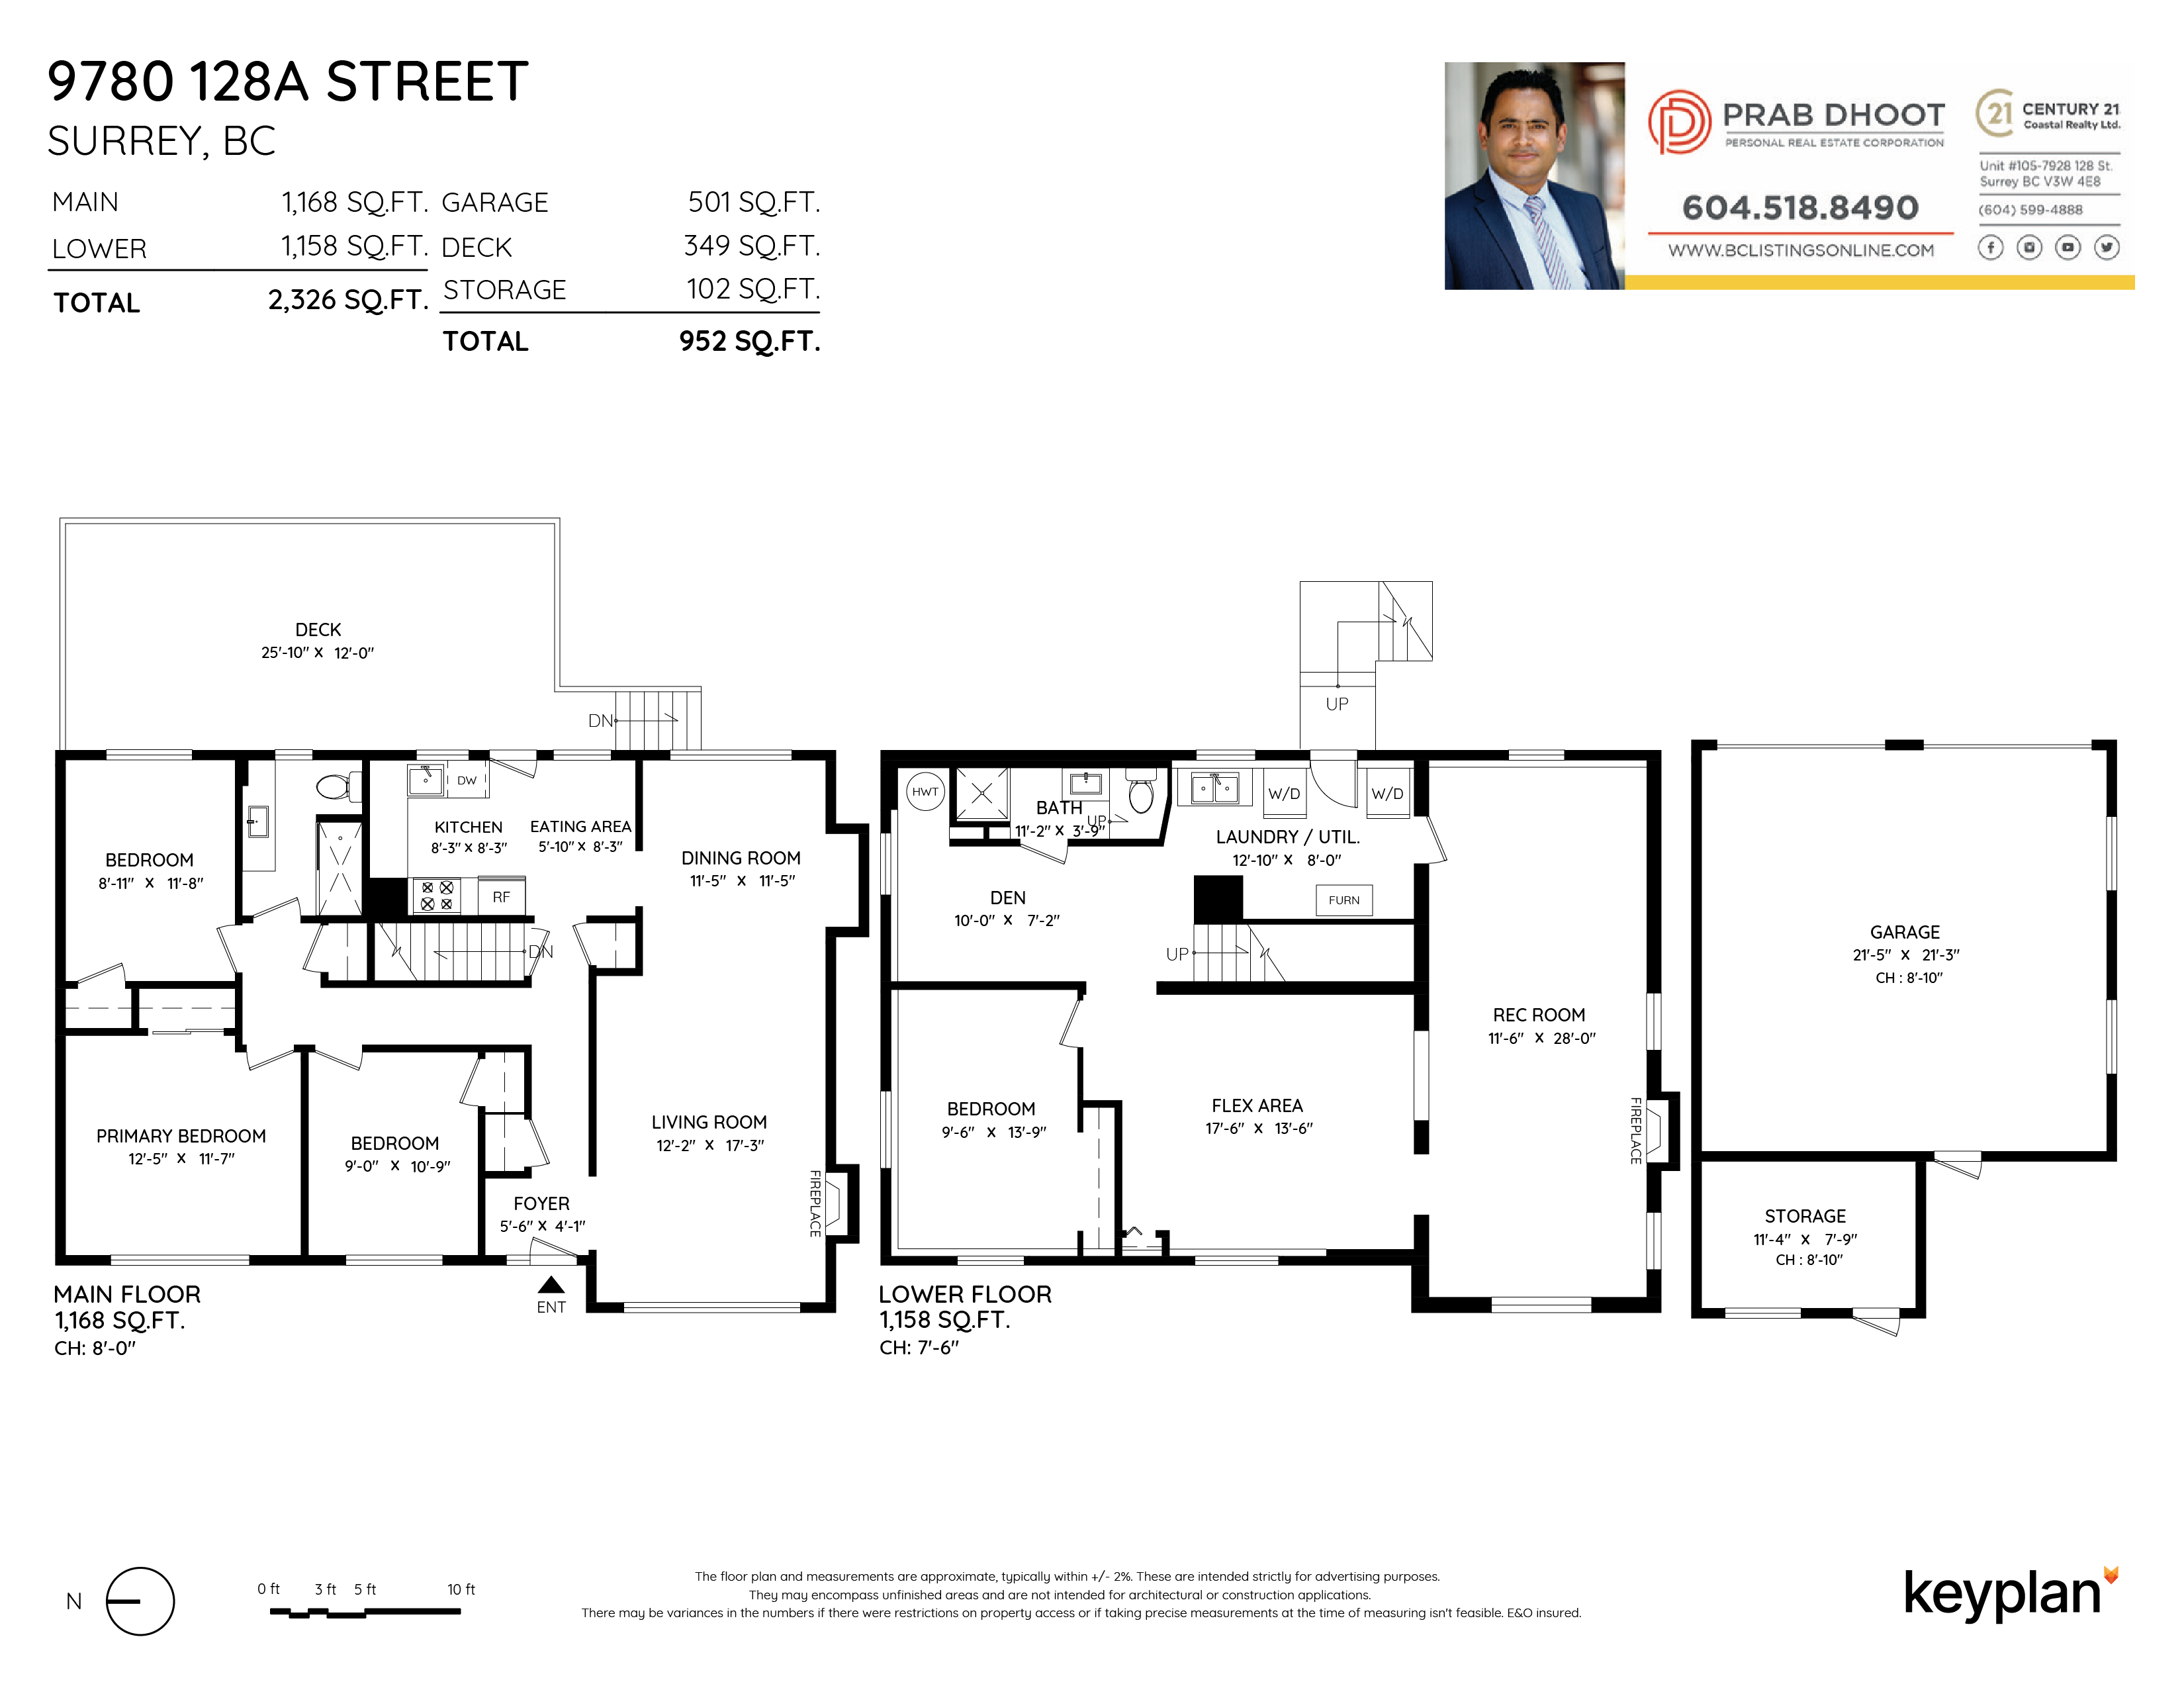 Prab Dhoot - 9780 128A Street, Surrey, BC, Canada | Floor Plan 1